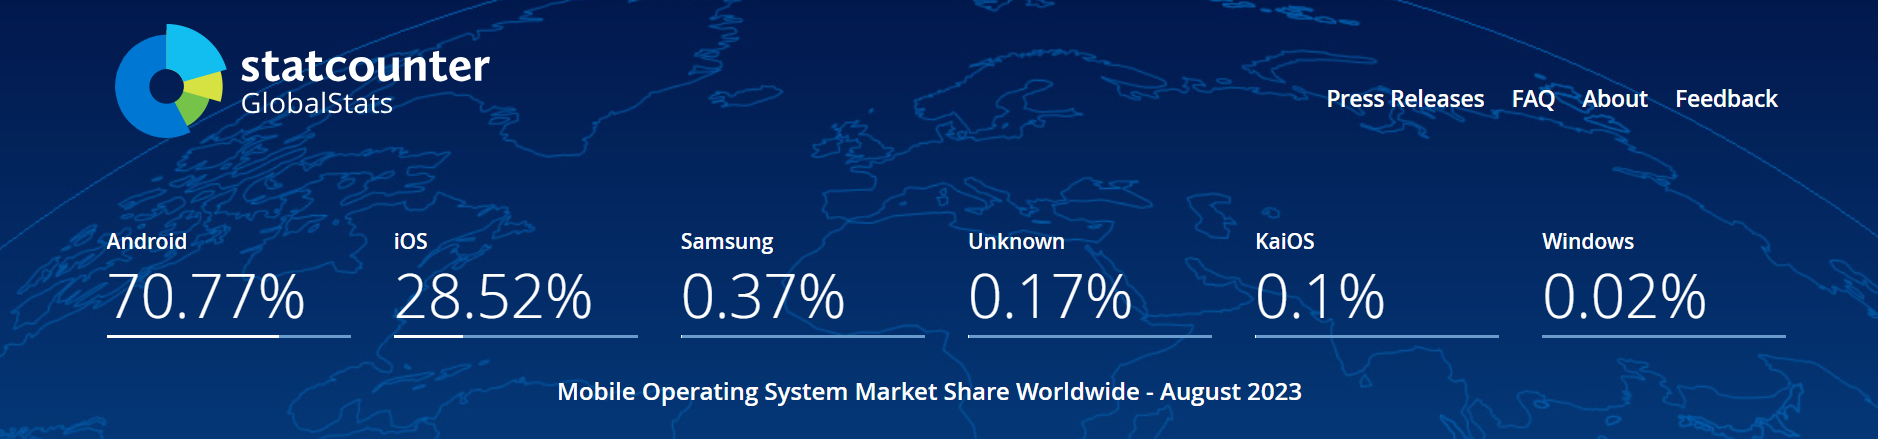 Mobile OS market share worldwide